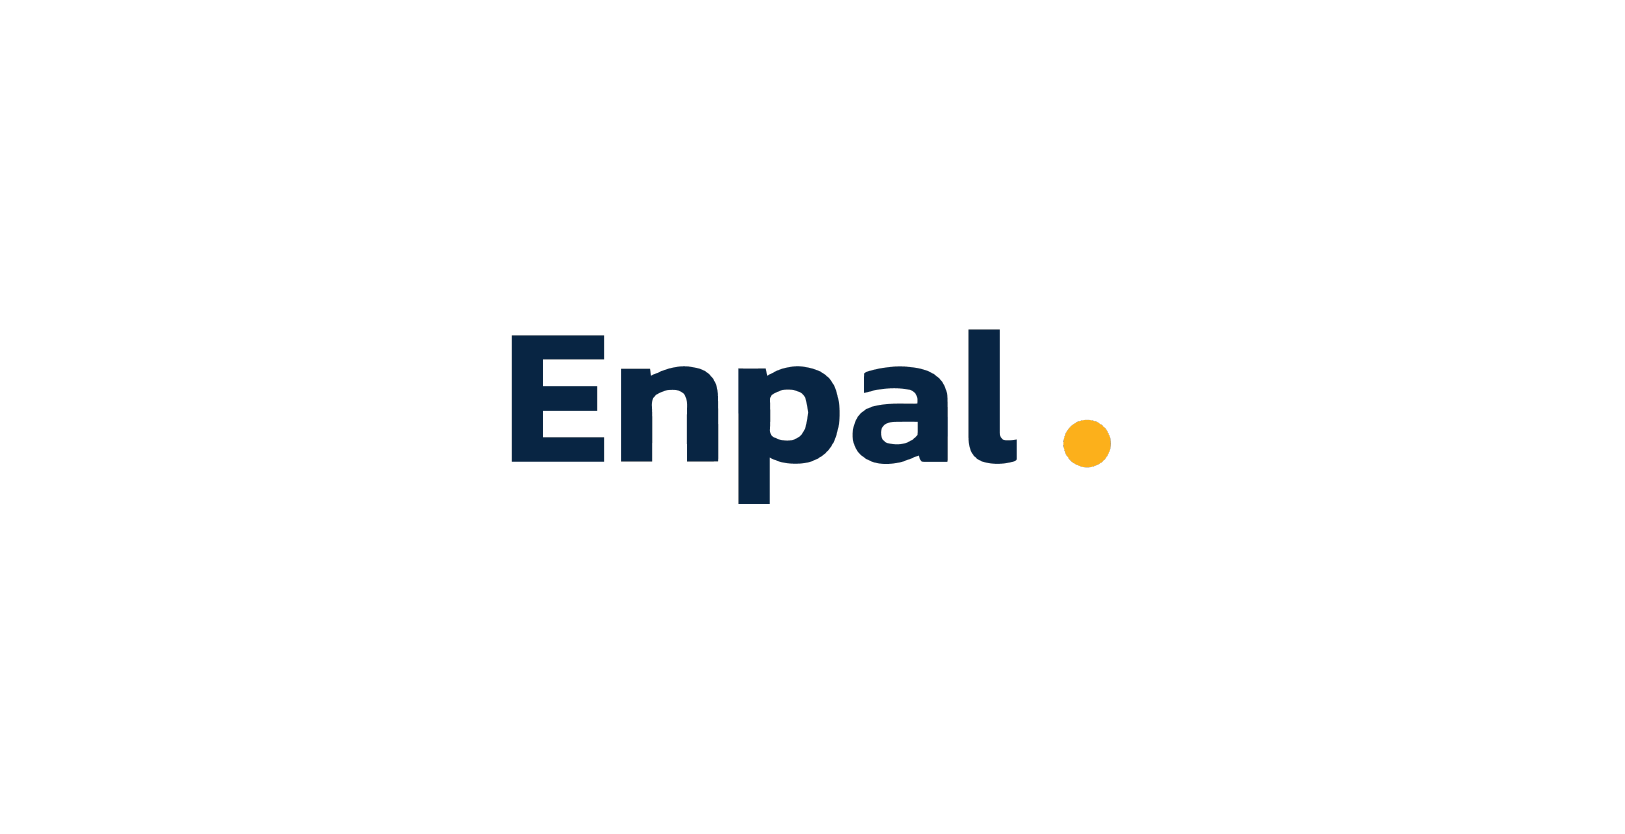 Vision Fund investment portfolio company Enpal's logo